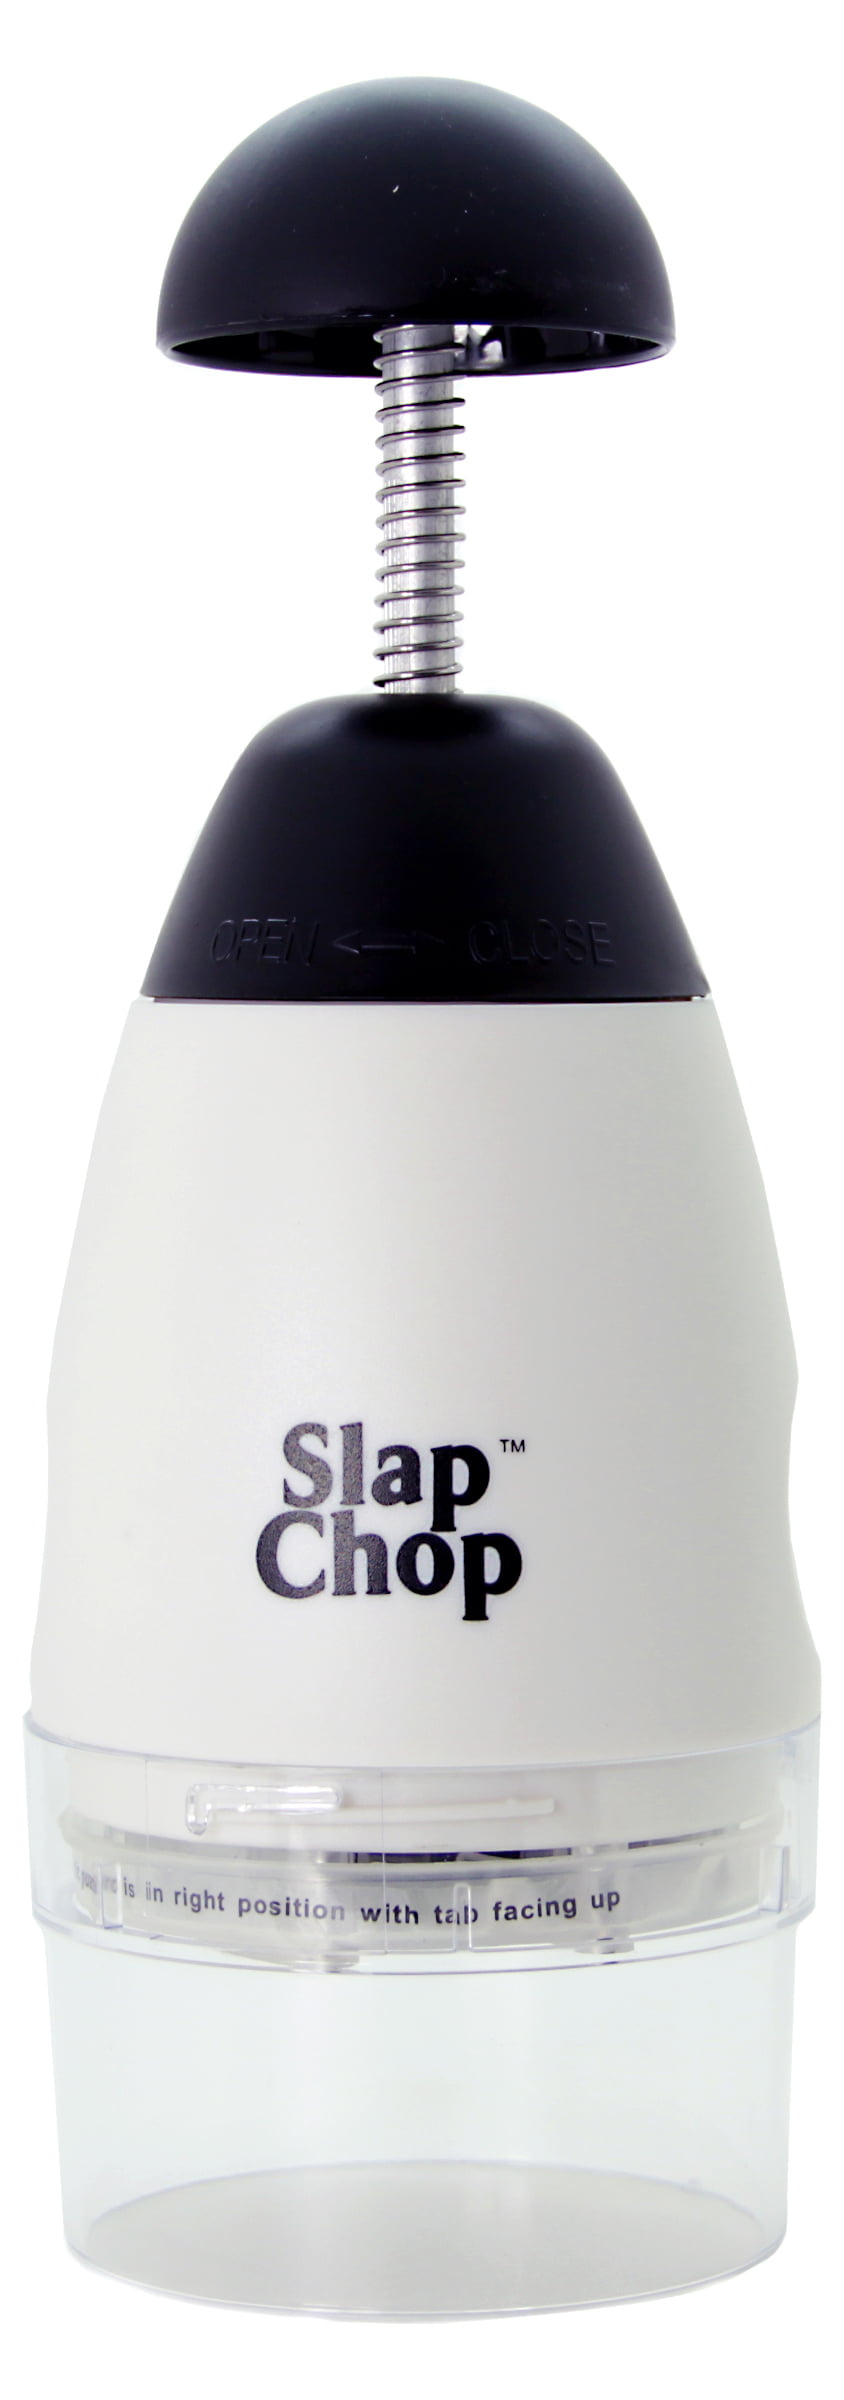 Buy Wholesale China Slap Chop & Graty Combo Slap Chop Slapchop Food Chopper  & Slap Chop & Graty Combo Slap Chop Slapchop Food C at USD 1.85